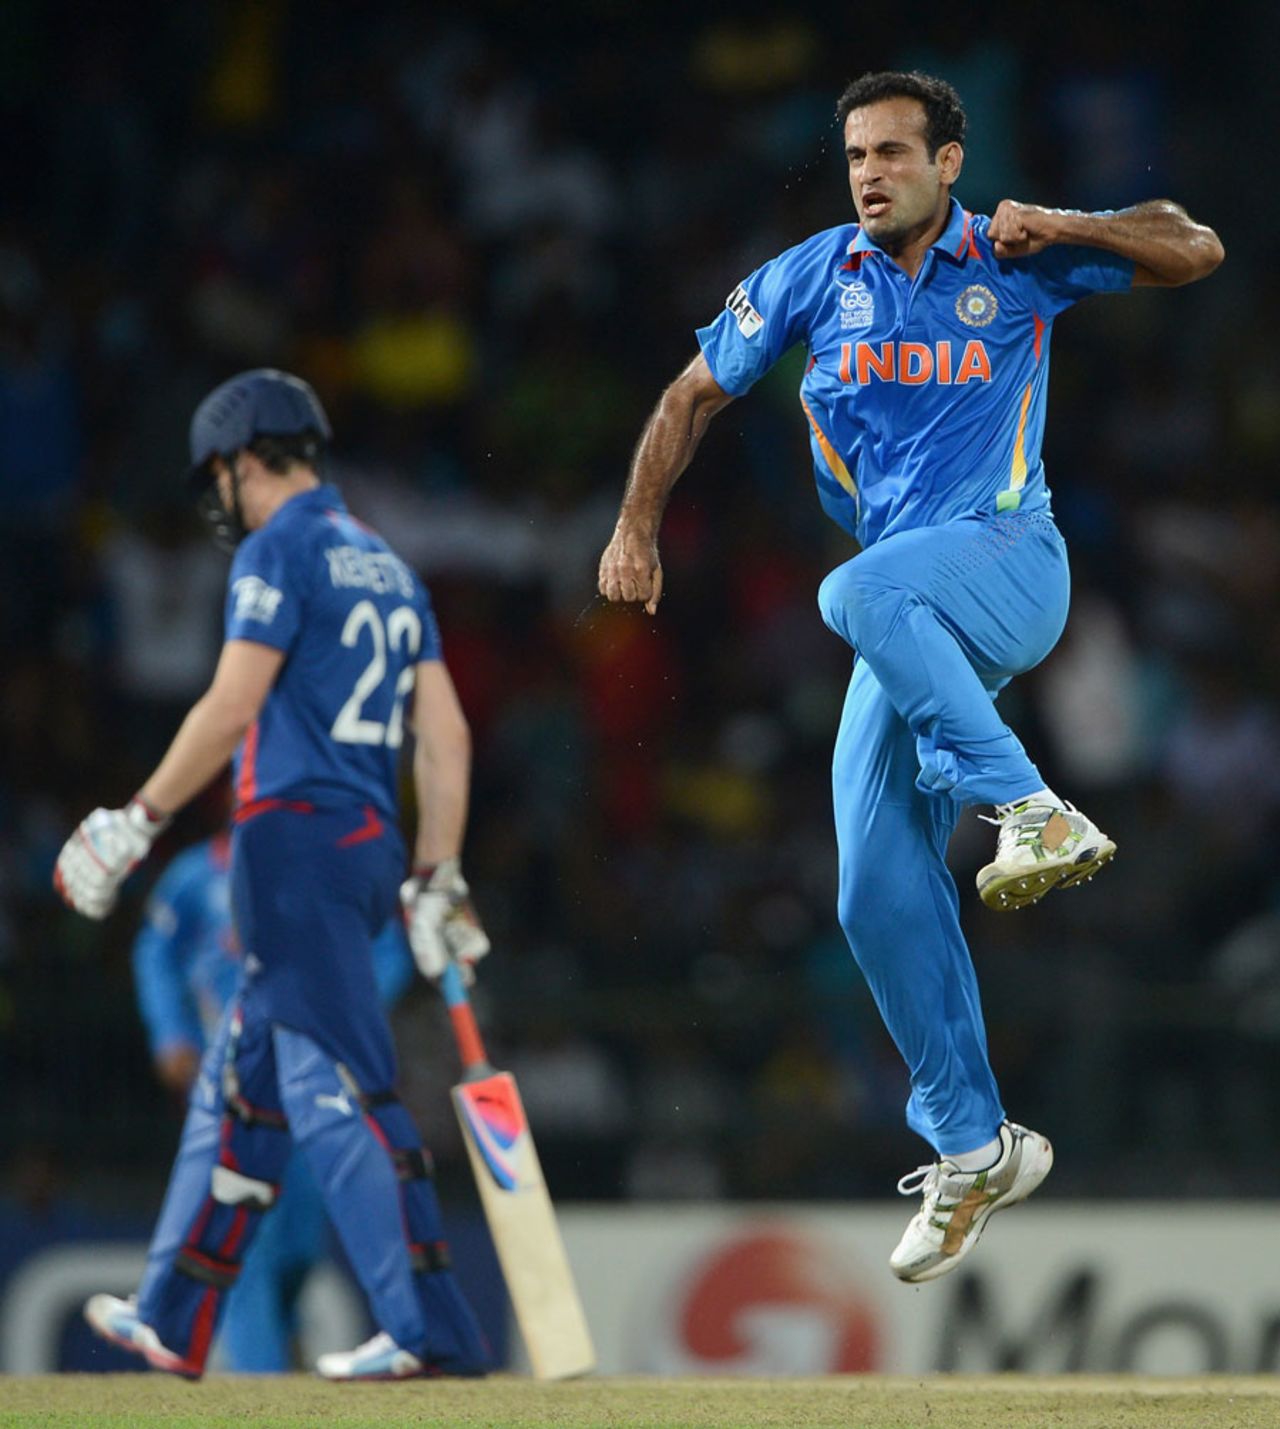 Irfan Pathan enthusiastically celebrates a wicket, England v India, World Twenty20, Group A, Colombo